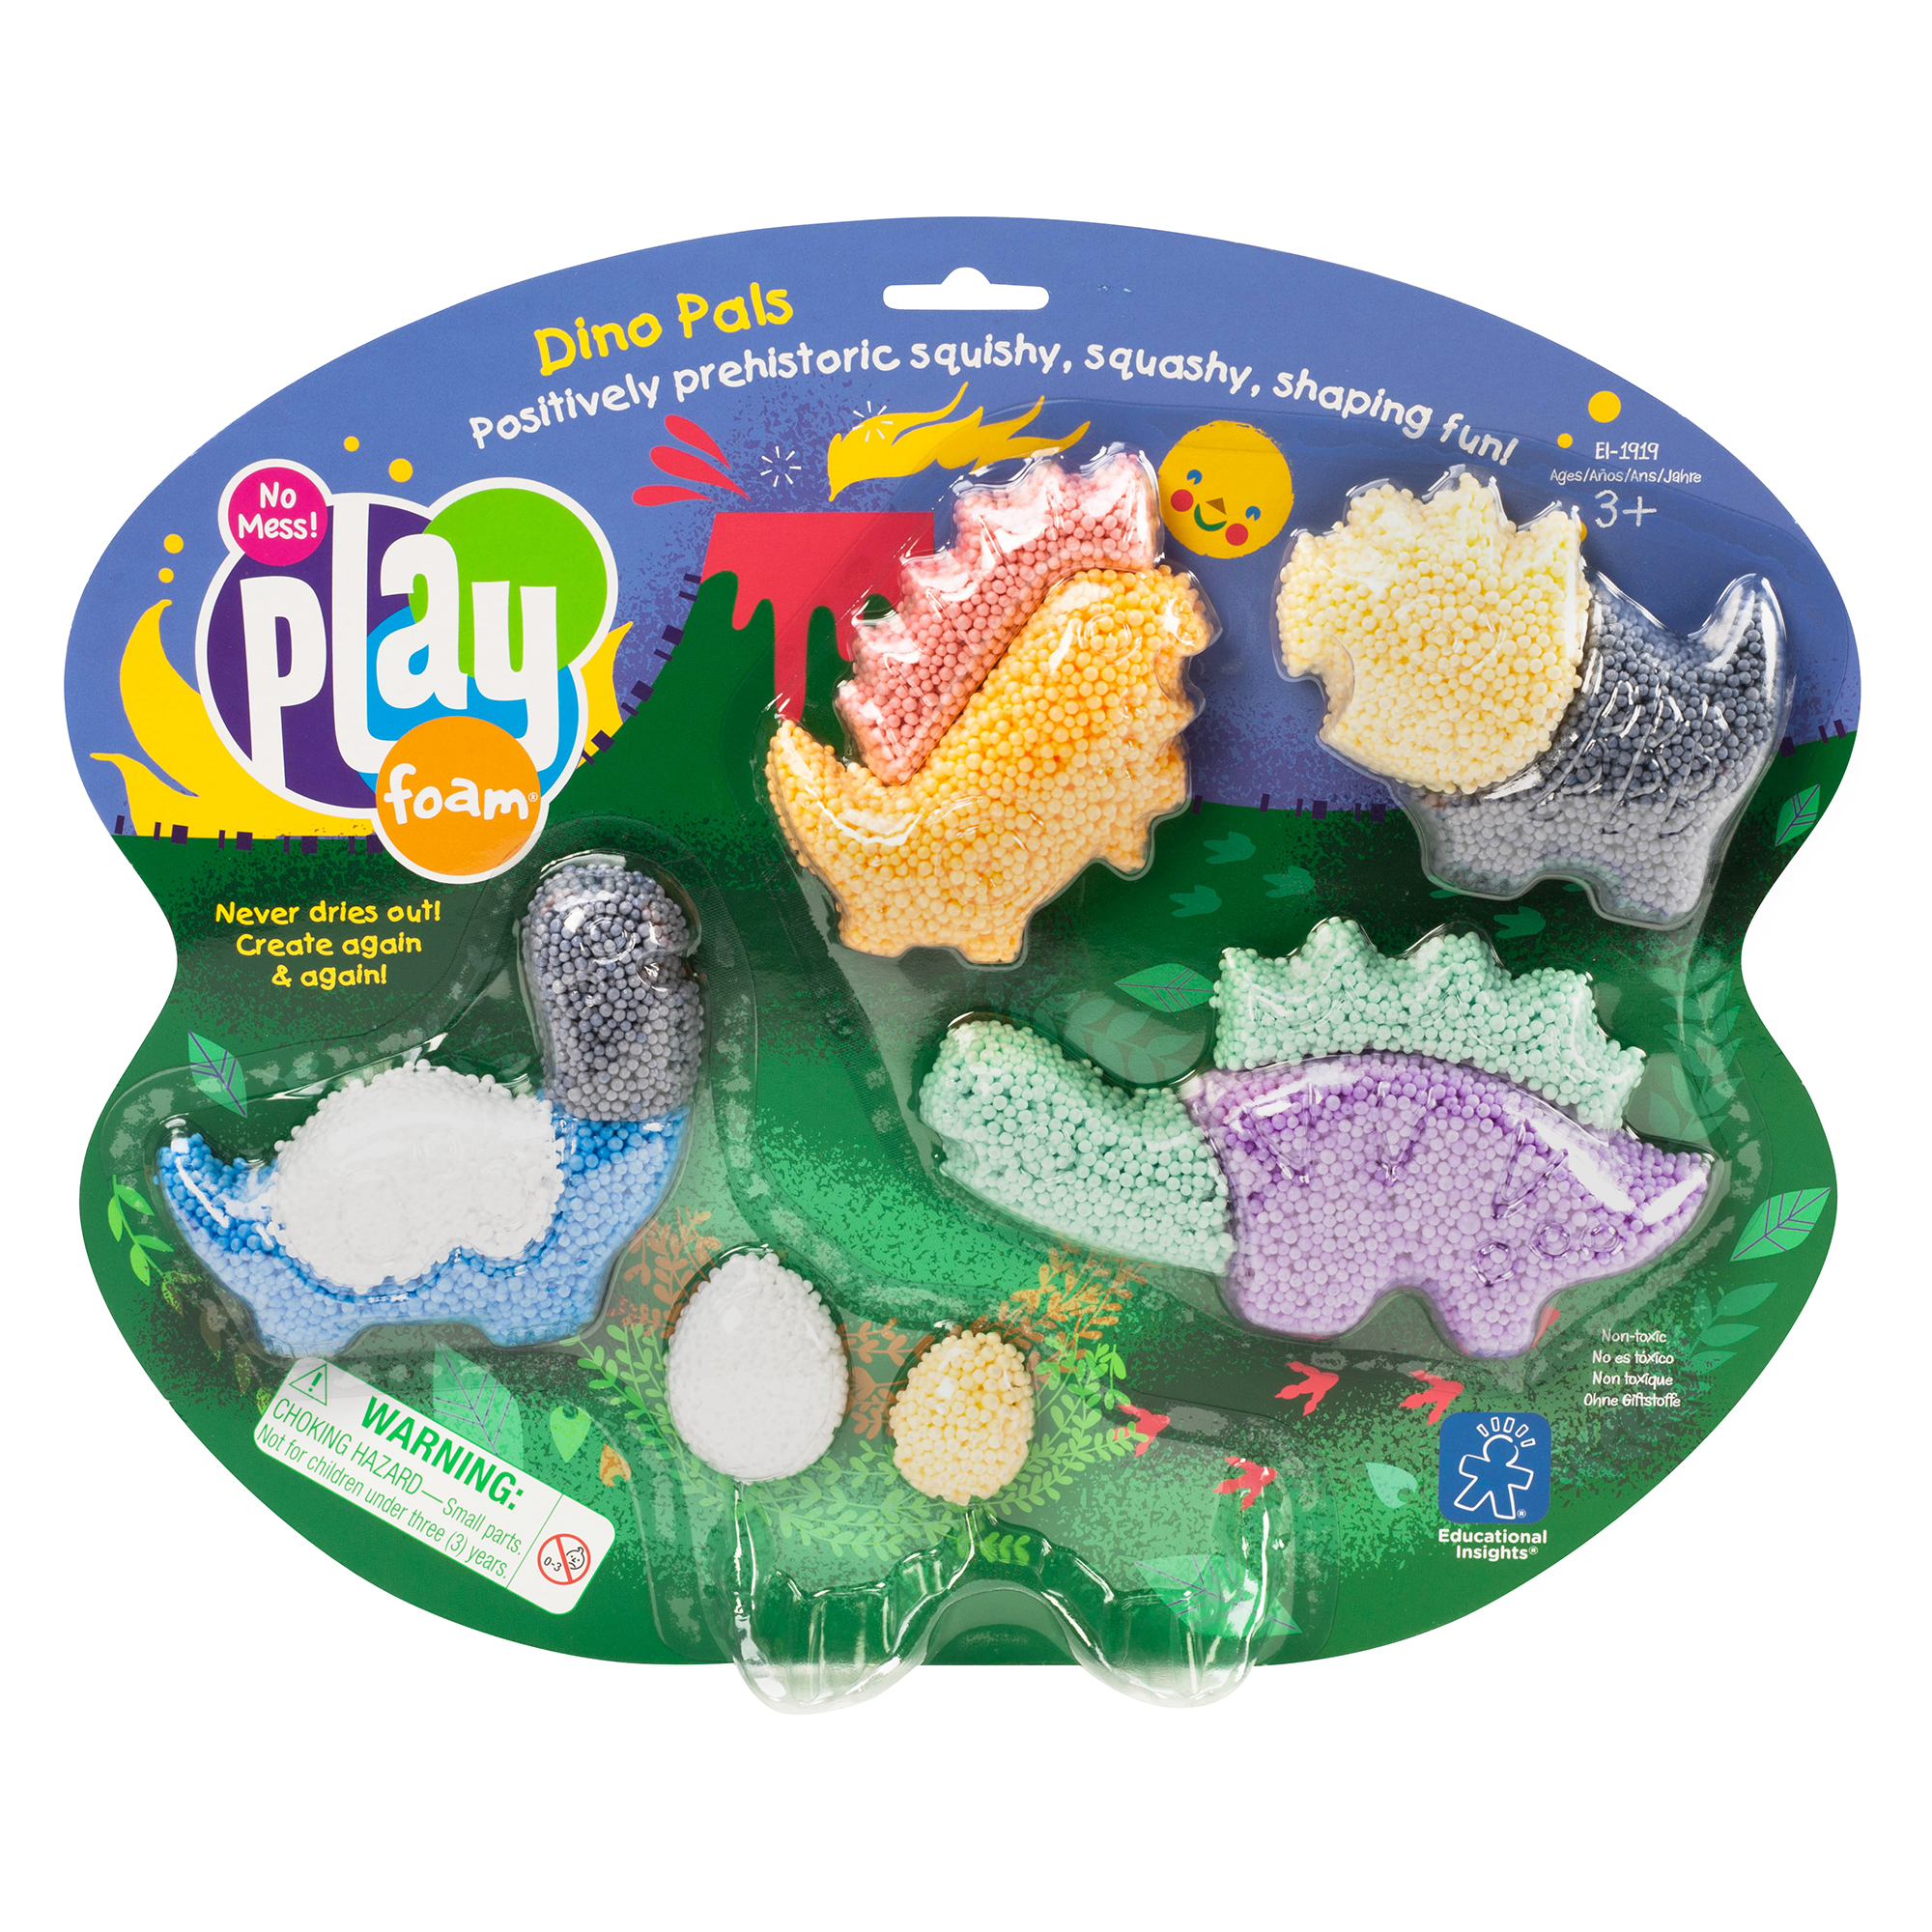 Playfoam Dino Pals Themed Set